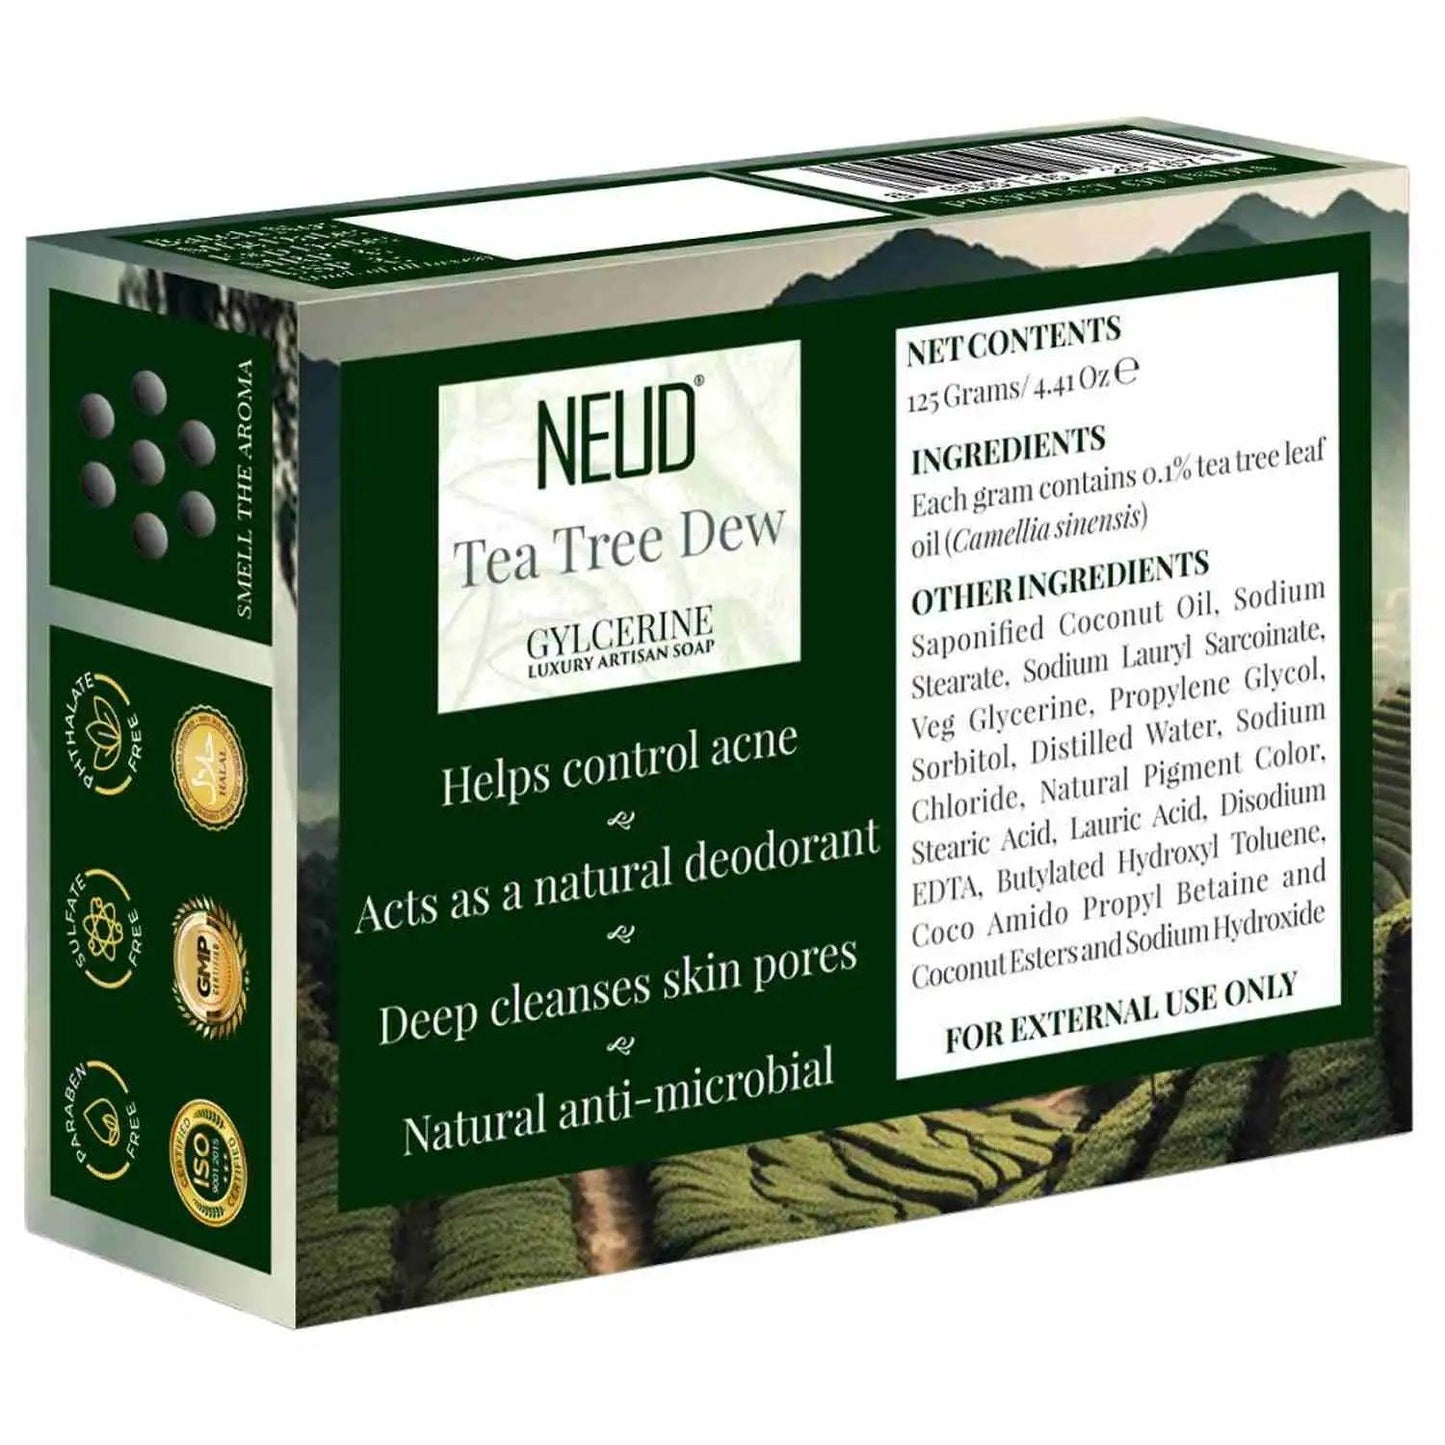 NEUD Tea Tree Dew Glycerine Luxury Artisan Handmade Soap 125g is Shipped Worldwide - everteen-neud.com